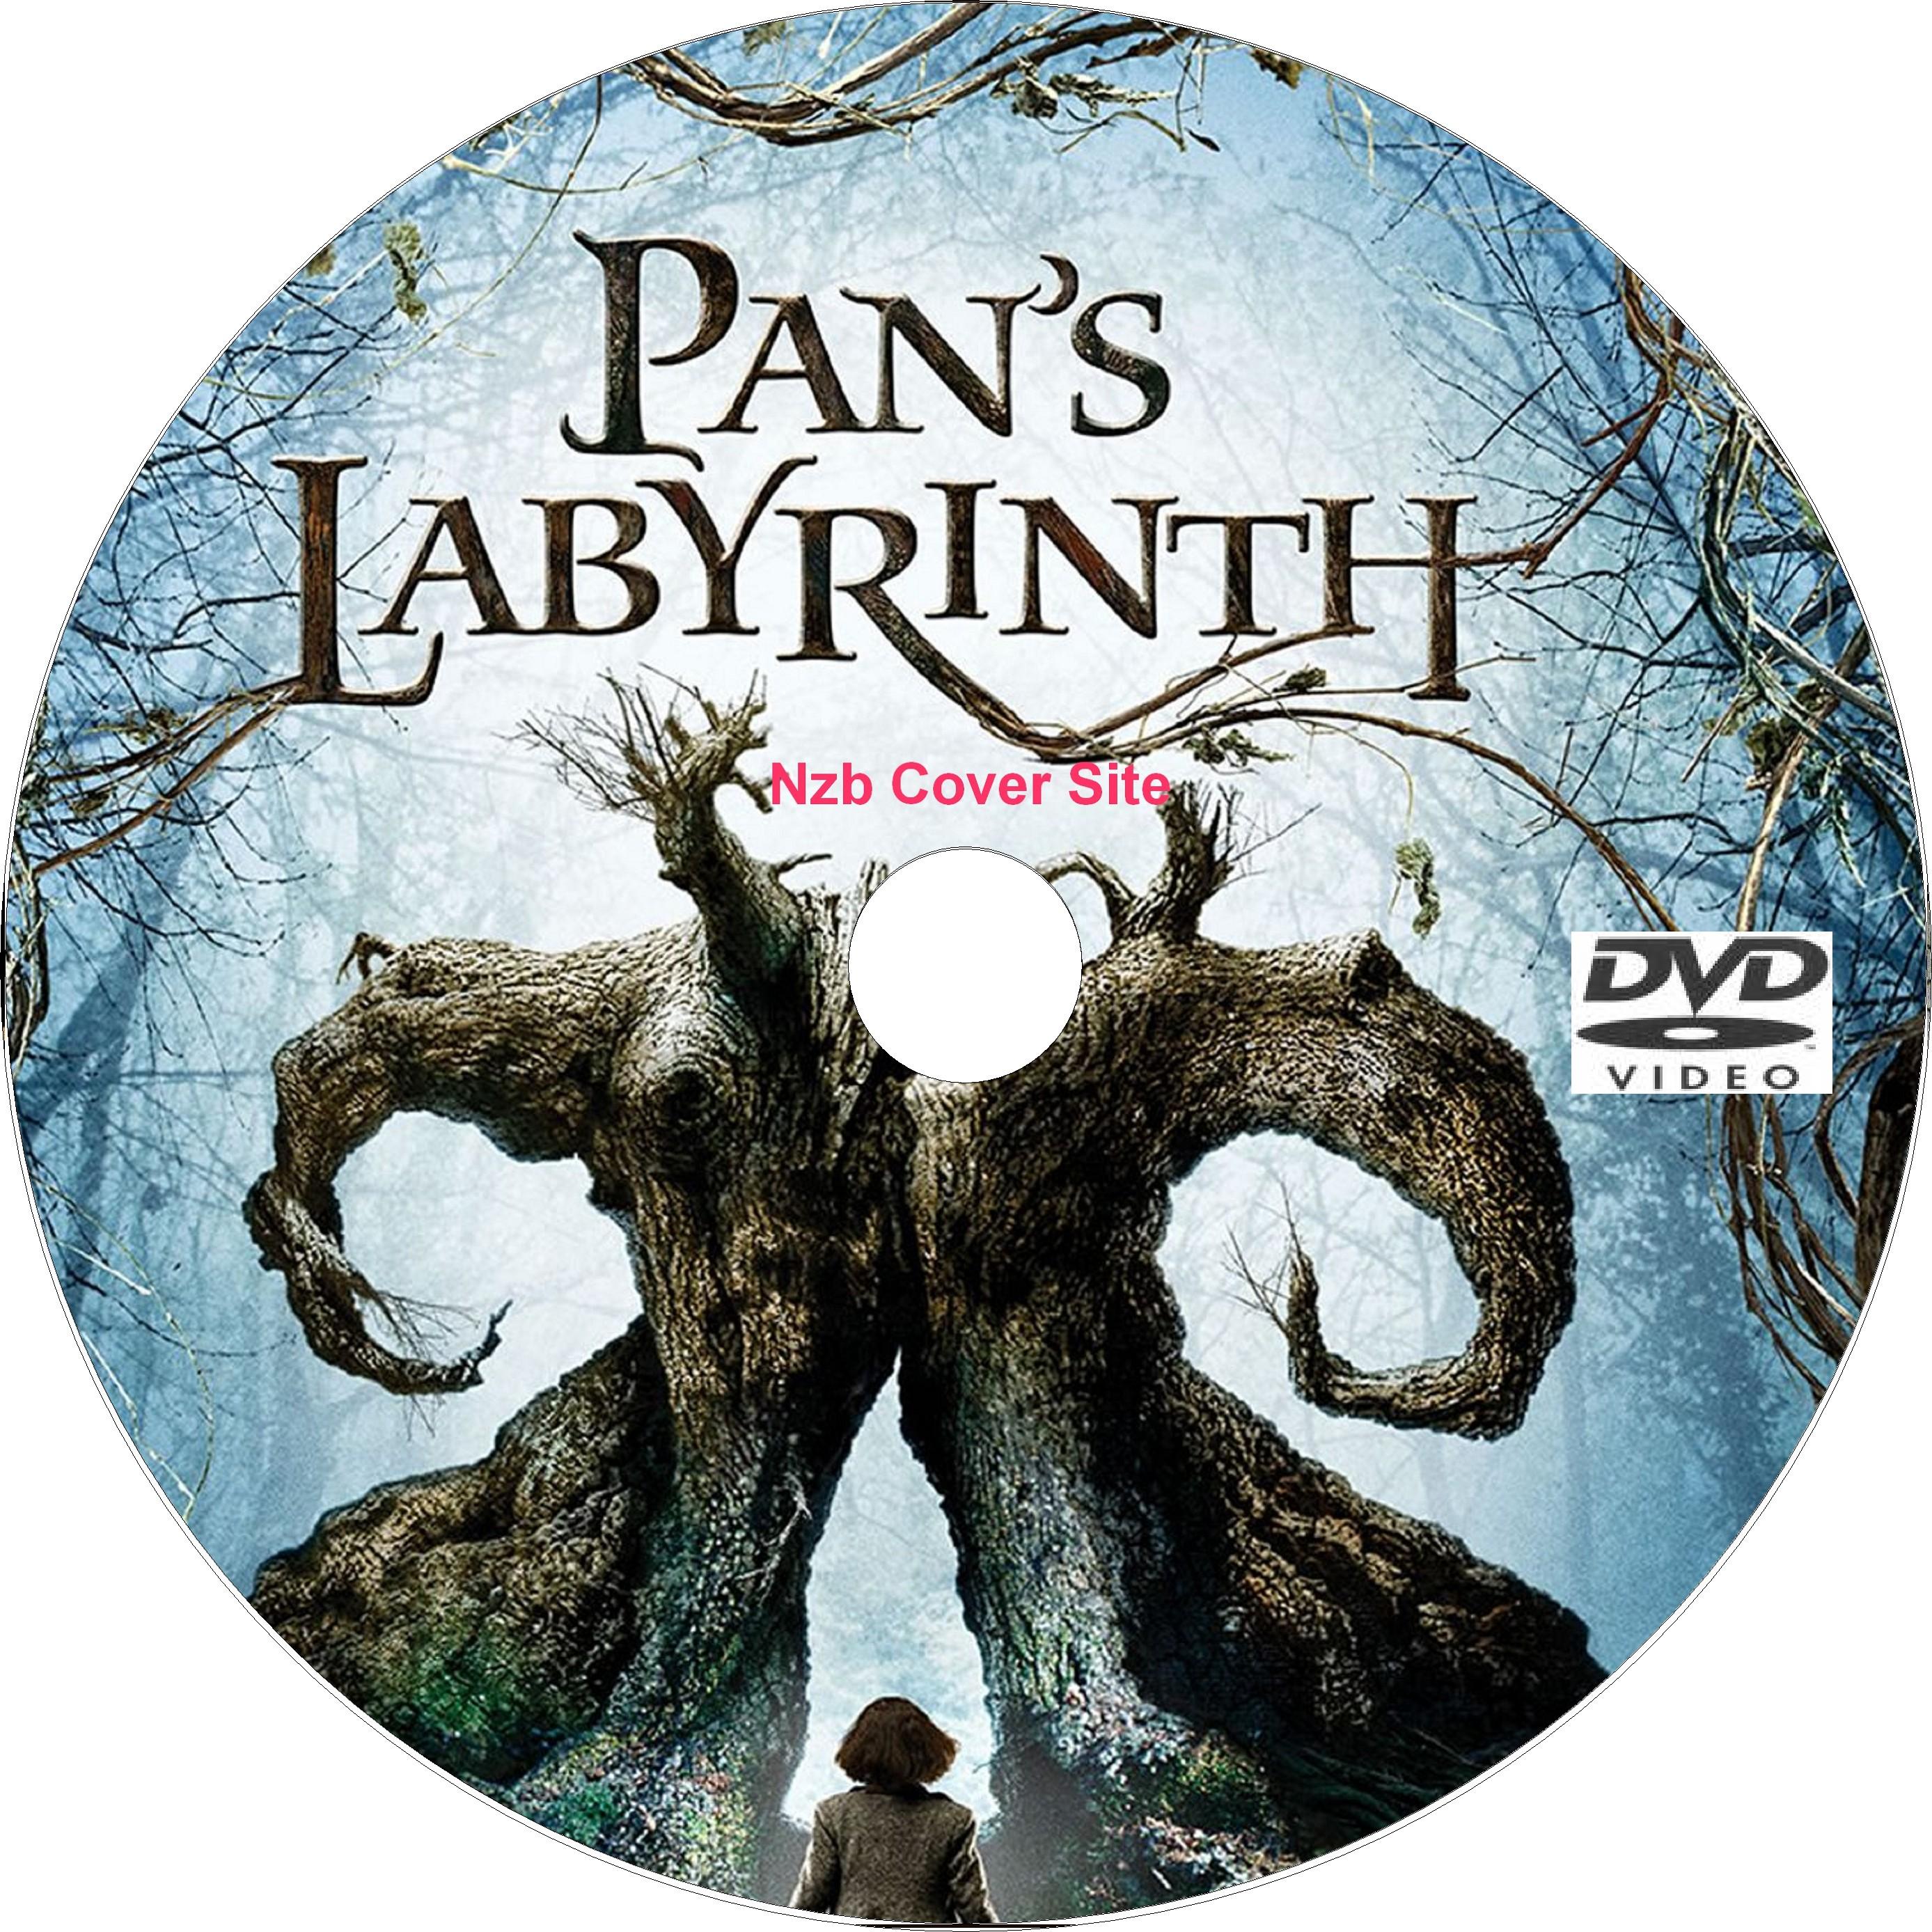 Pans labyrinth 2006